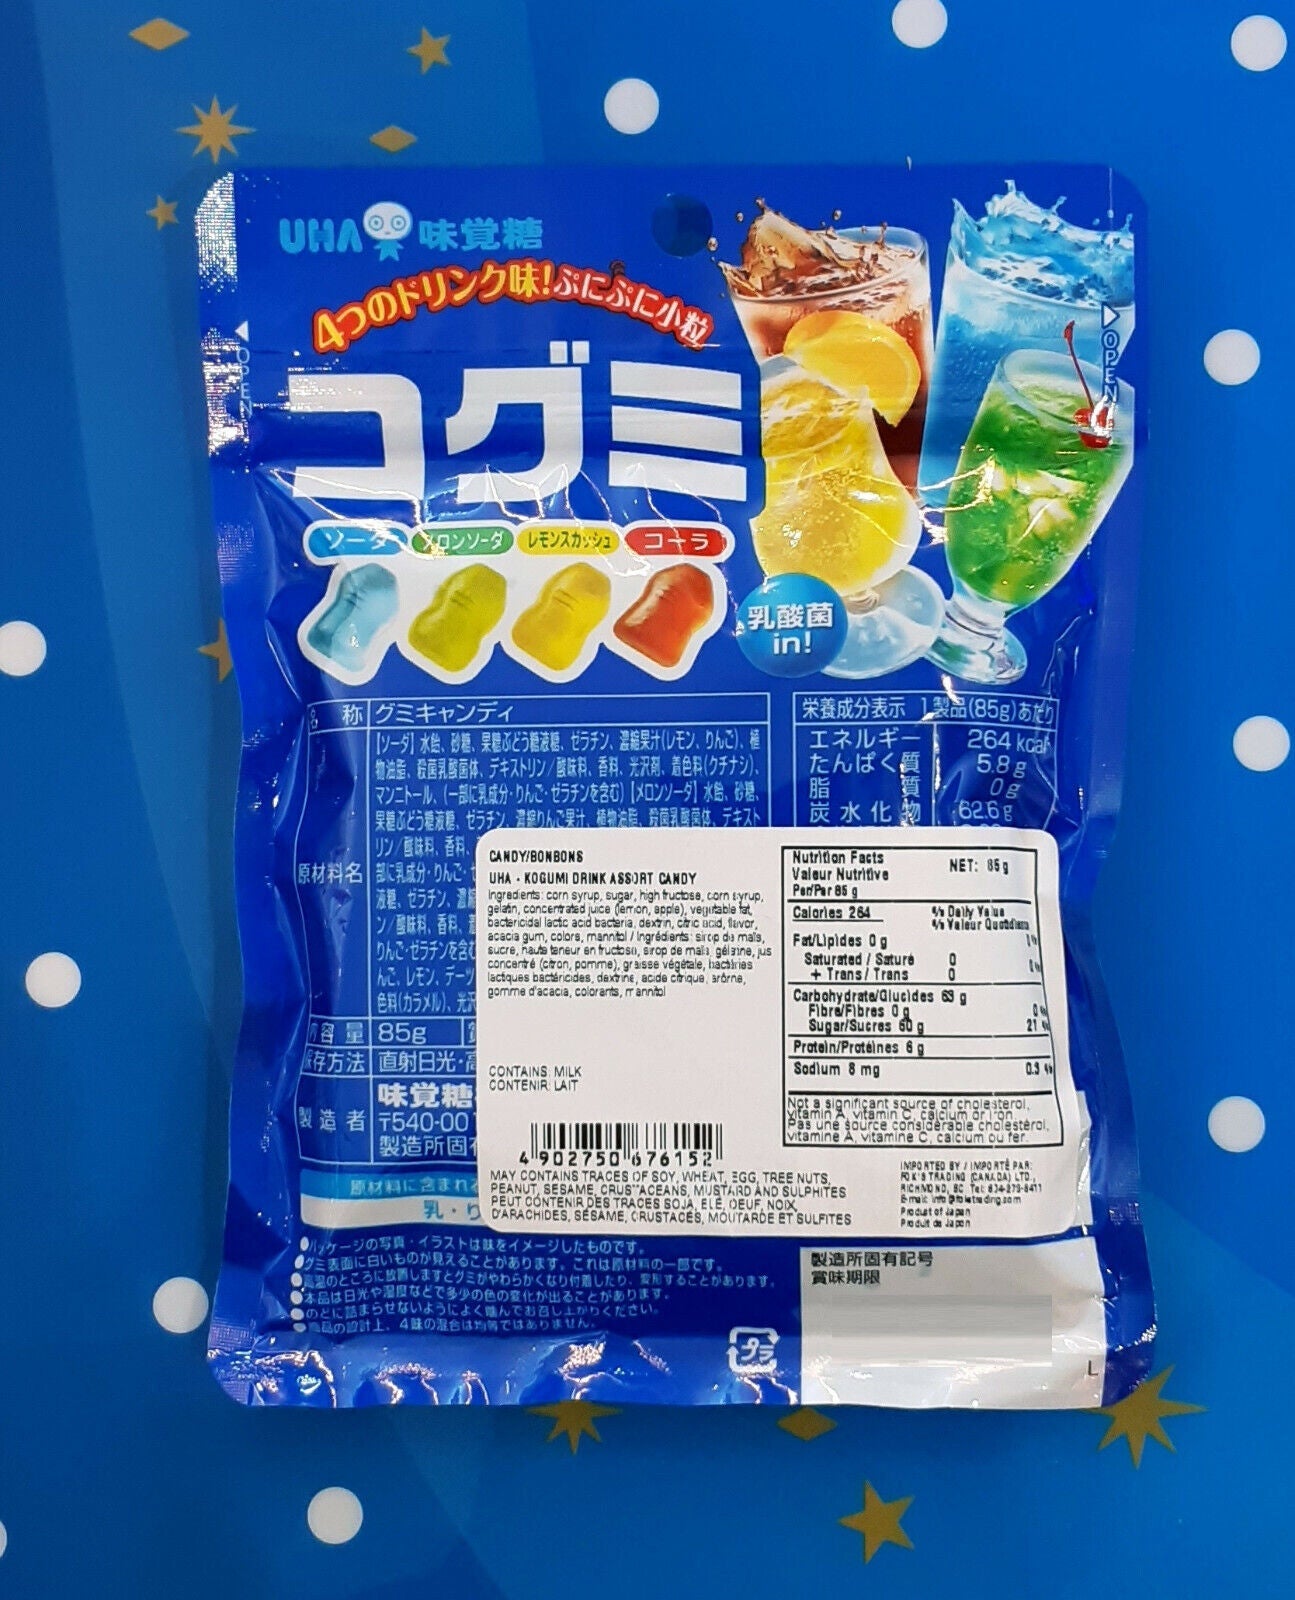 UHA Gummy Candy, Mikakuto Soda (Japan)